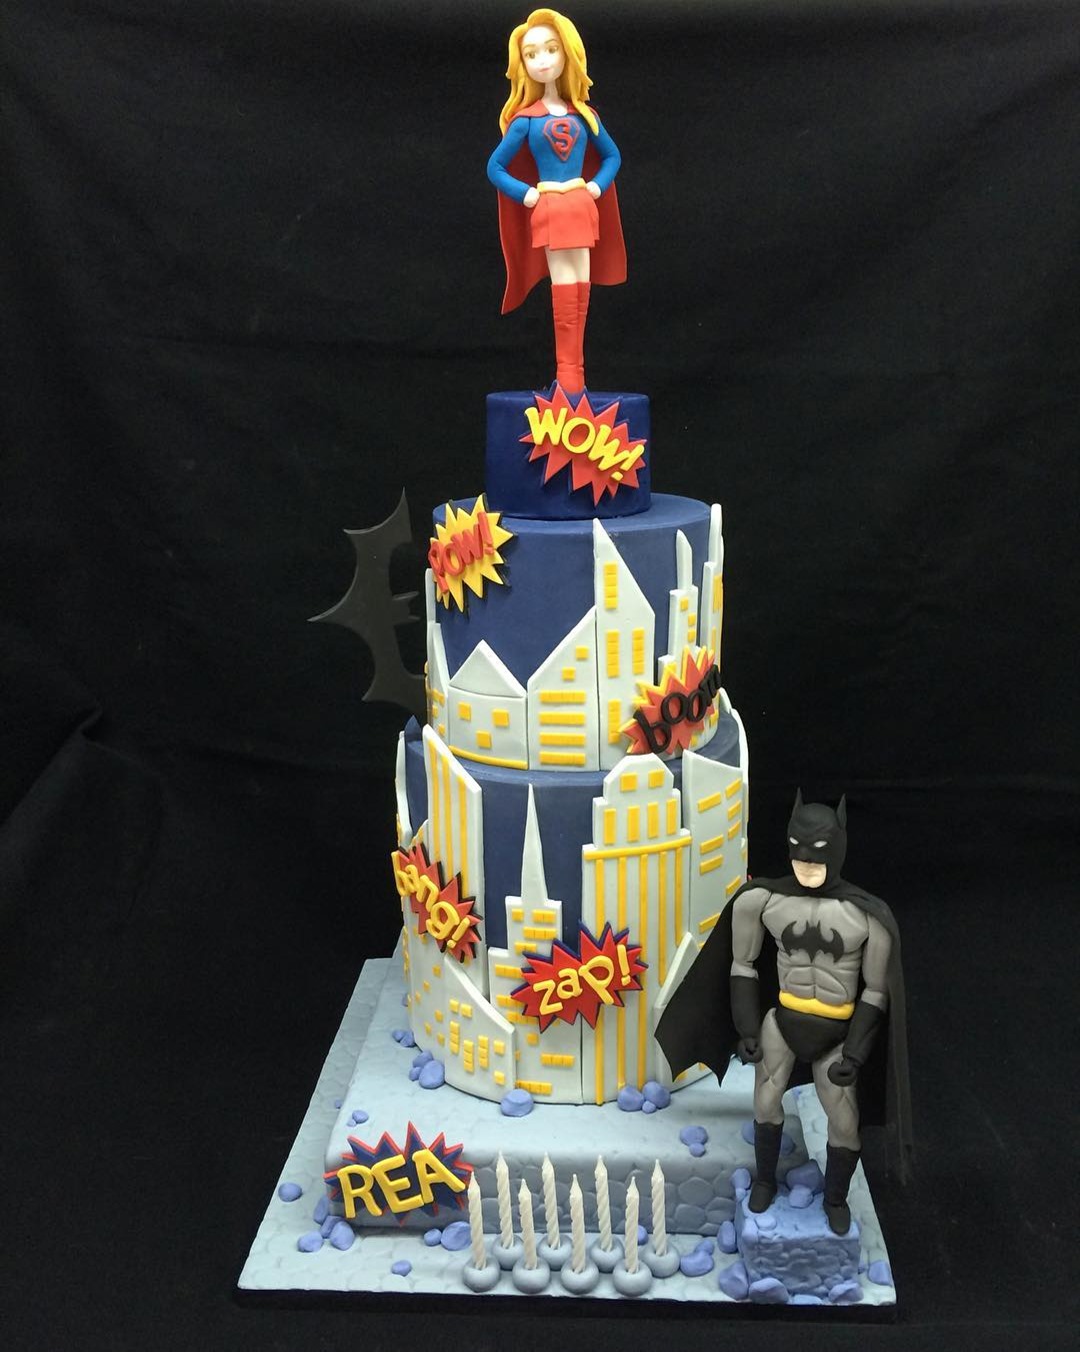 Supergirl and Batman Cake